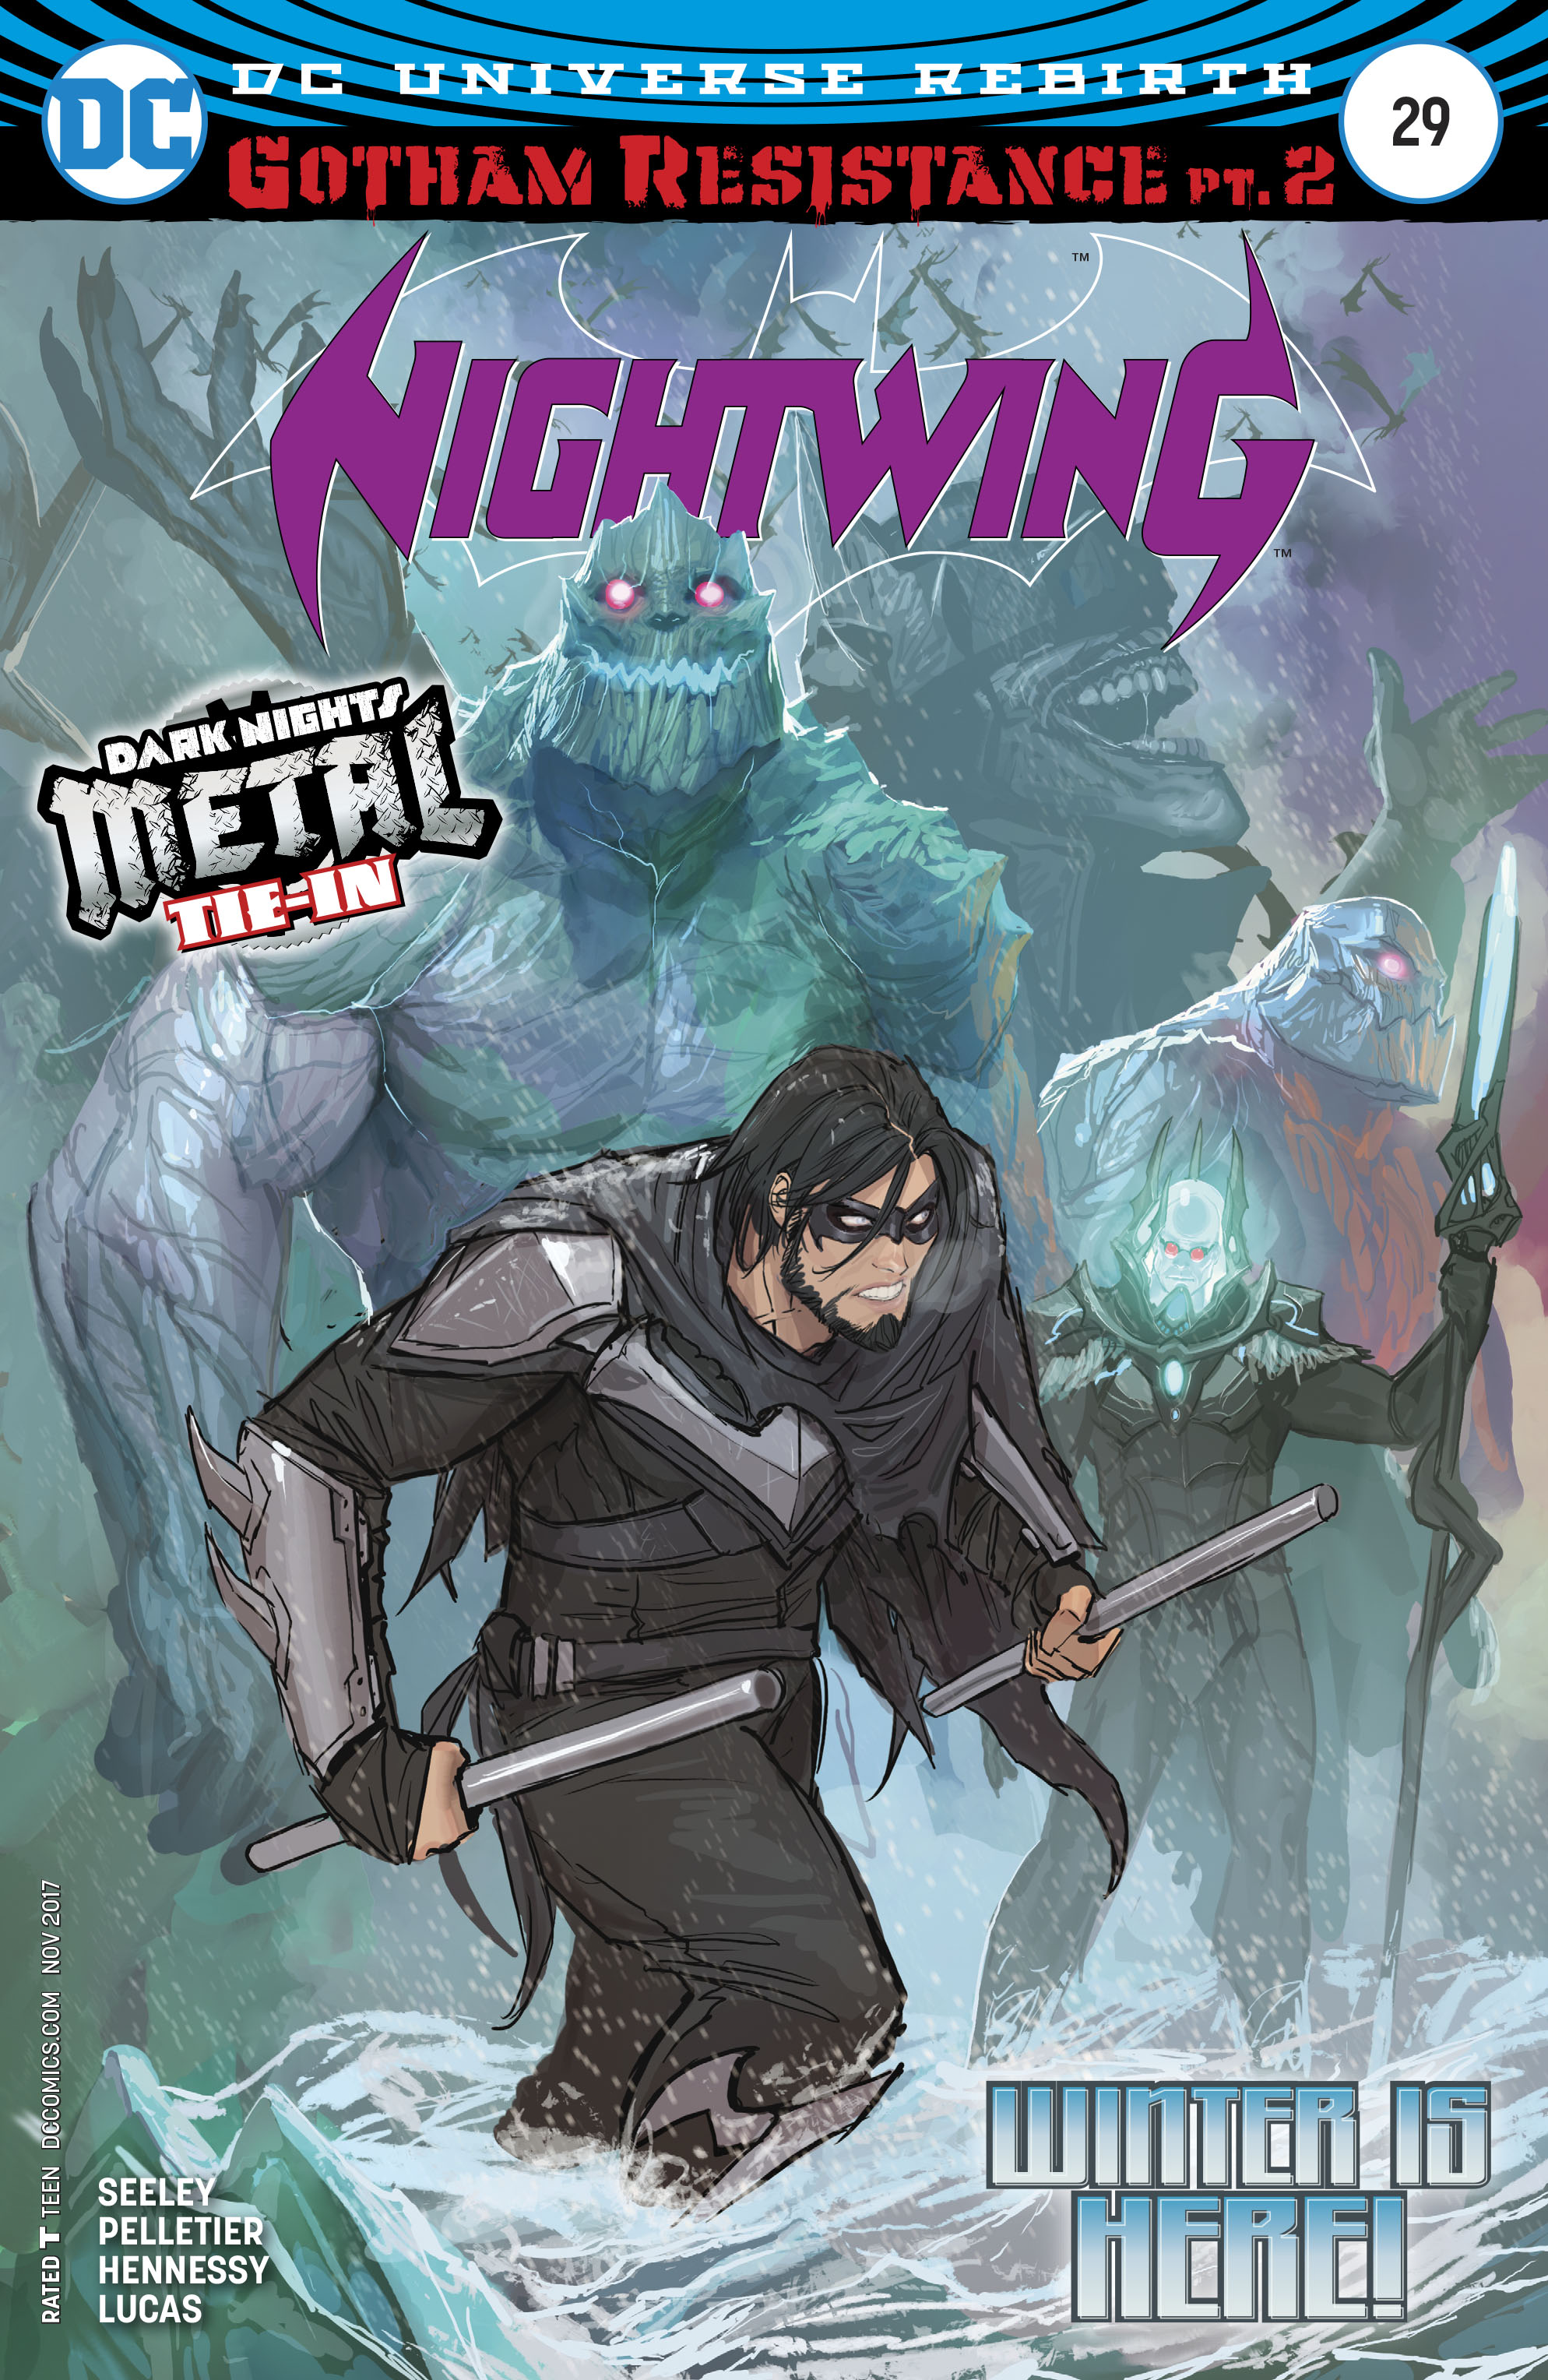 Nightwing Vol 4 #29 Cover A Regular Stjepan Sejic Cover (Gotham Resistance Part 2)(Dark Nights Metal Tie-In)